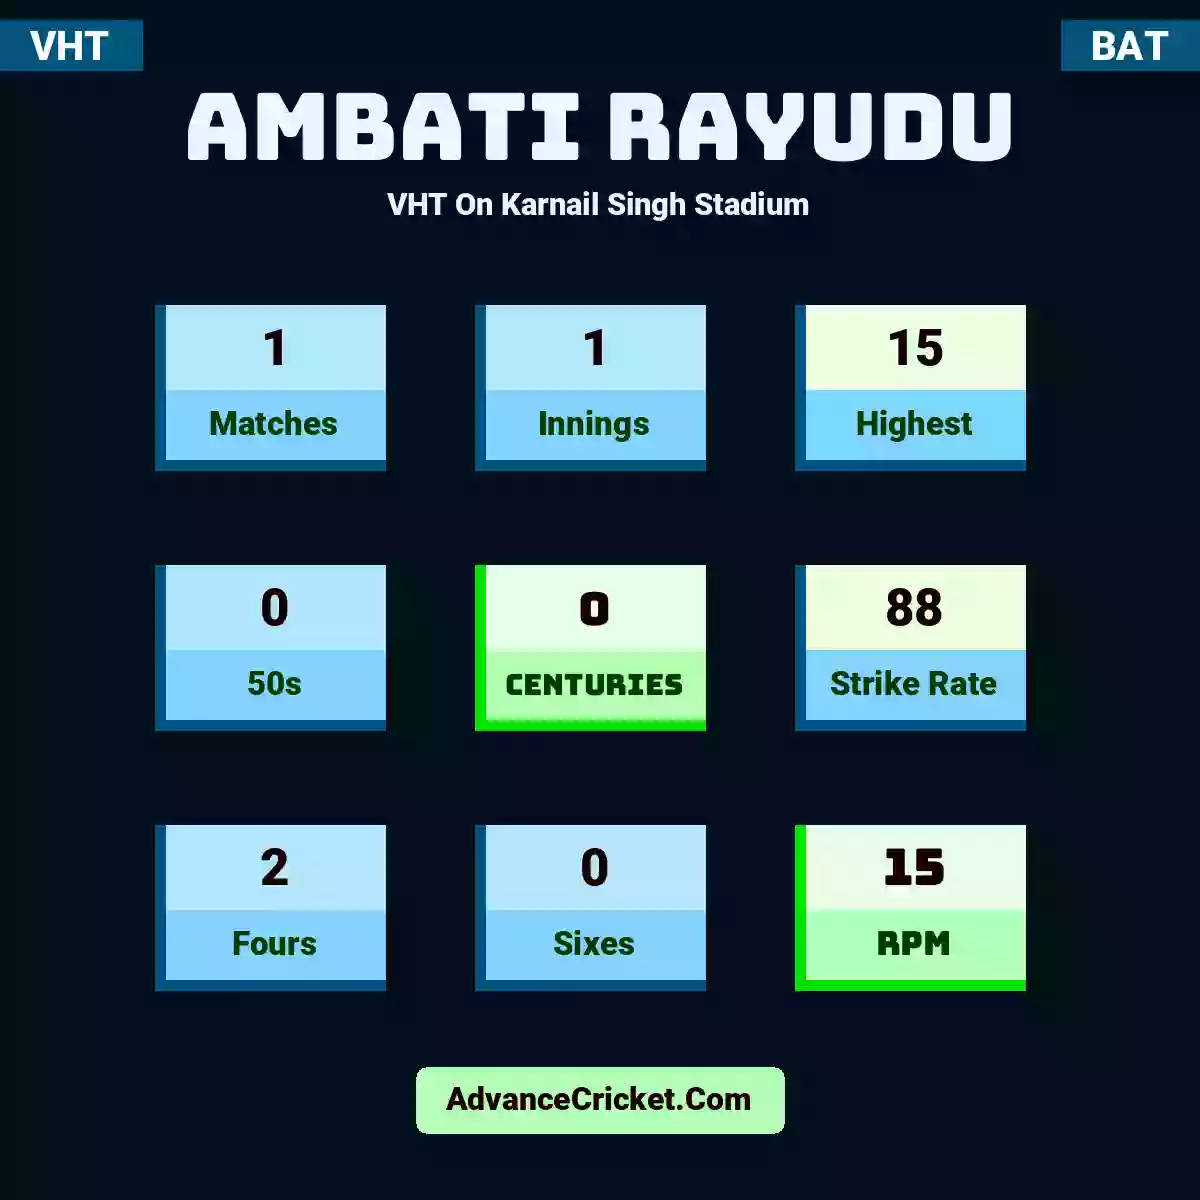 Ambati Rayudu VHT  On Karnail Singh Stadium, Ambati Rayudu played 1 matches, scored 15 runs as highest, 0 half-centuries, and 0 centuries, with a strike rate of 88. A.Rayudu hit 2 fours and 0 sixes, with an RPM of 15.